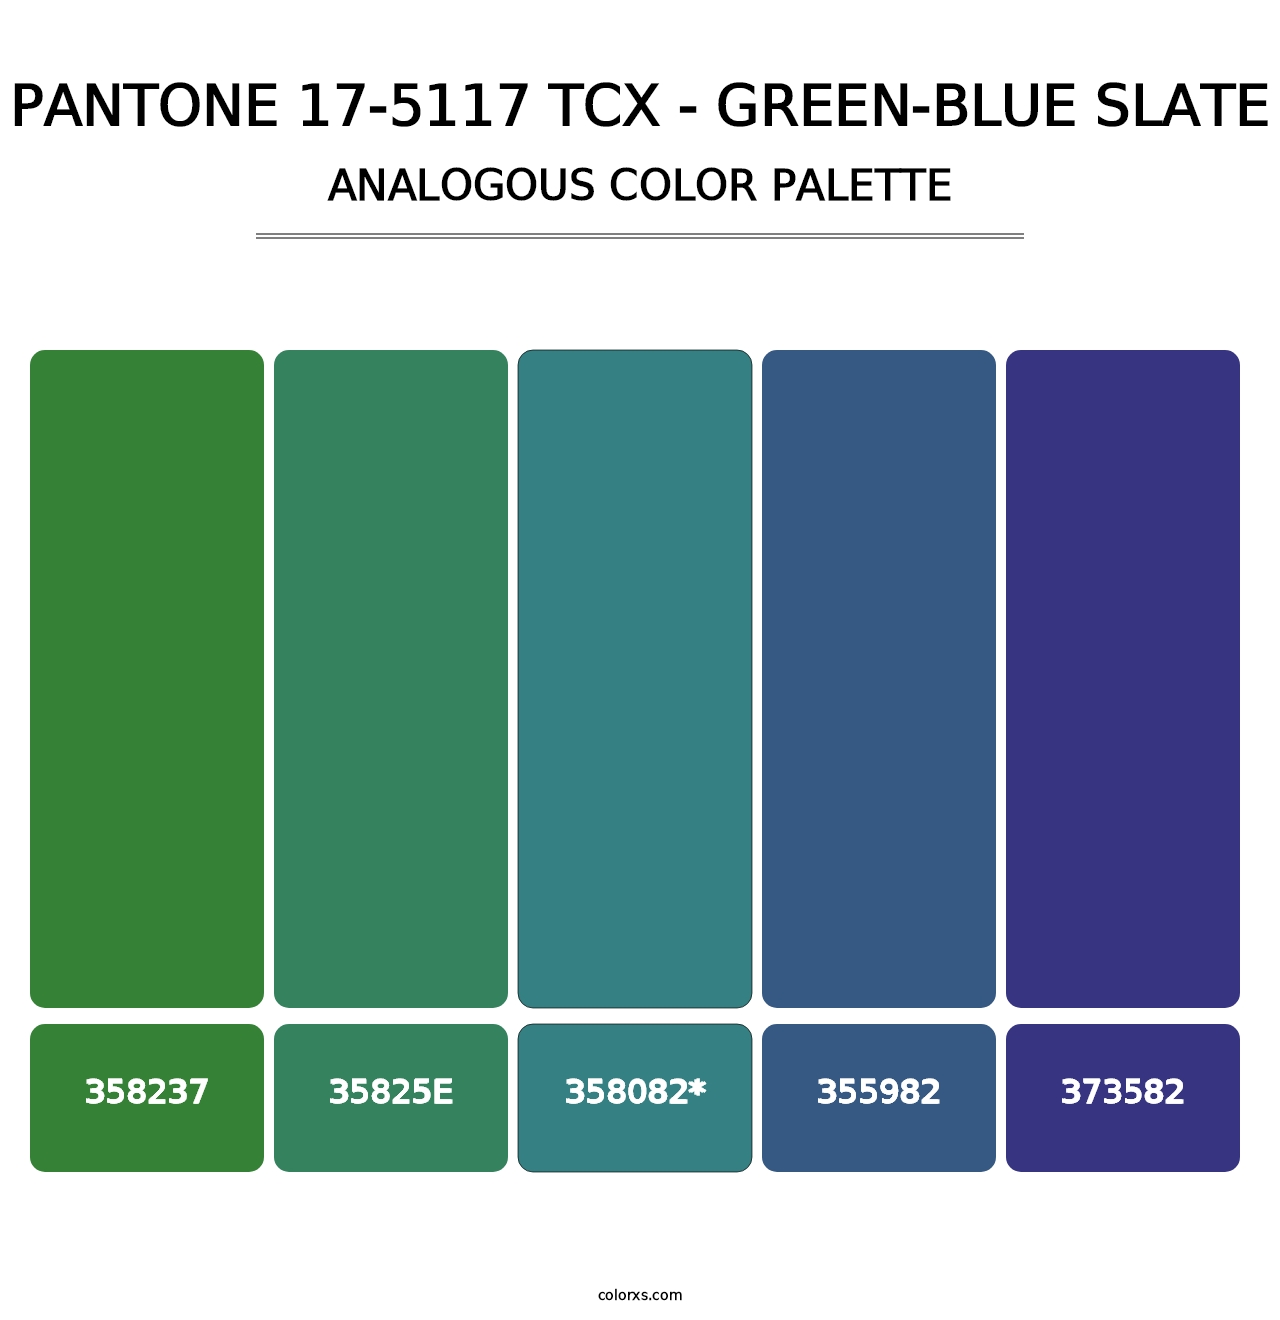 PANTONE 17-5117 TCX - Green-Blue Slate - Analogous Color Palette